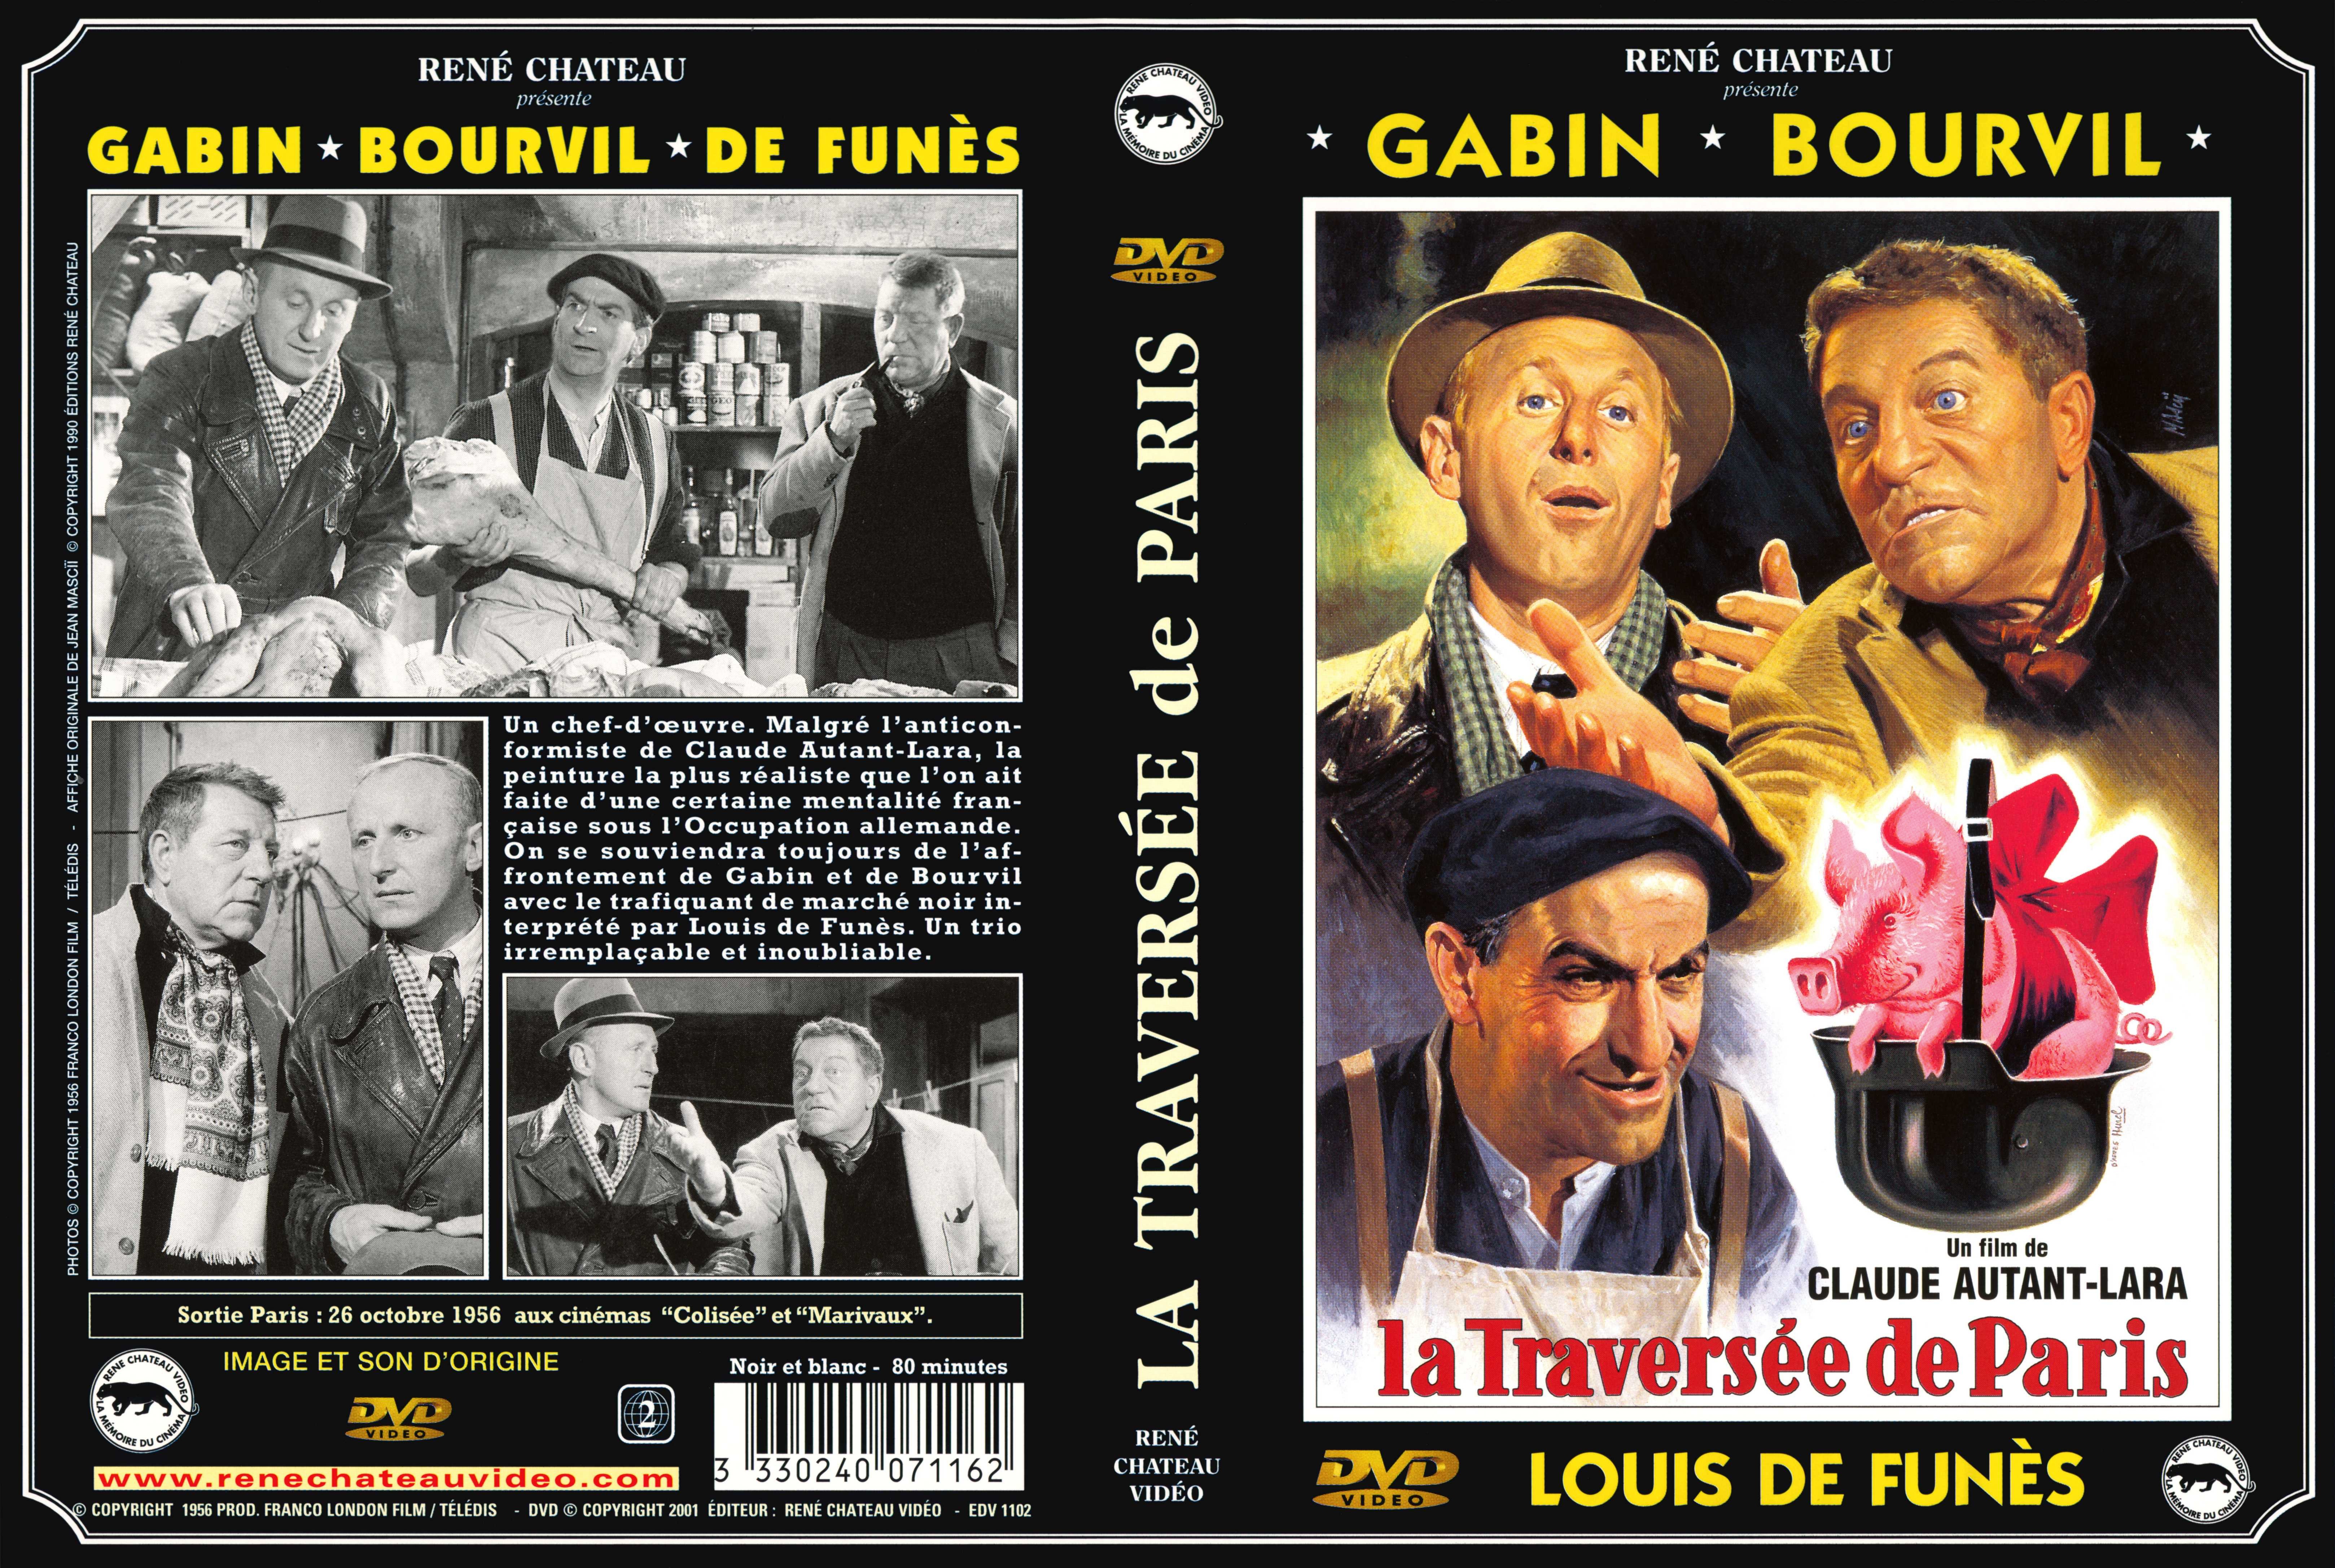 Jaquette DVD La traversee de Paris v3